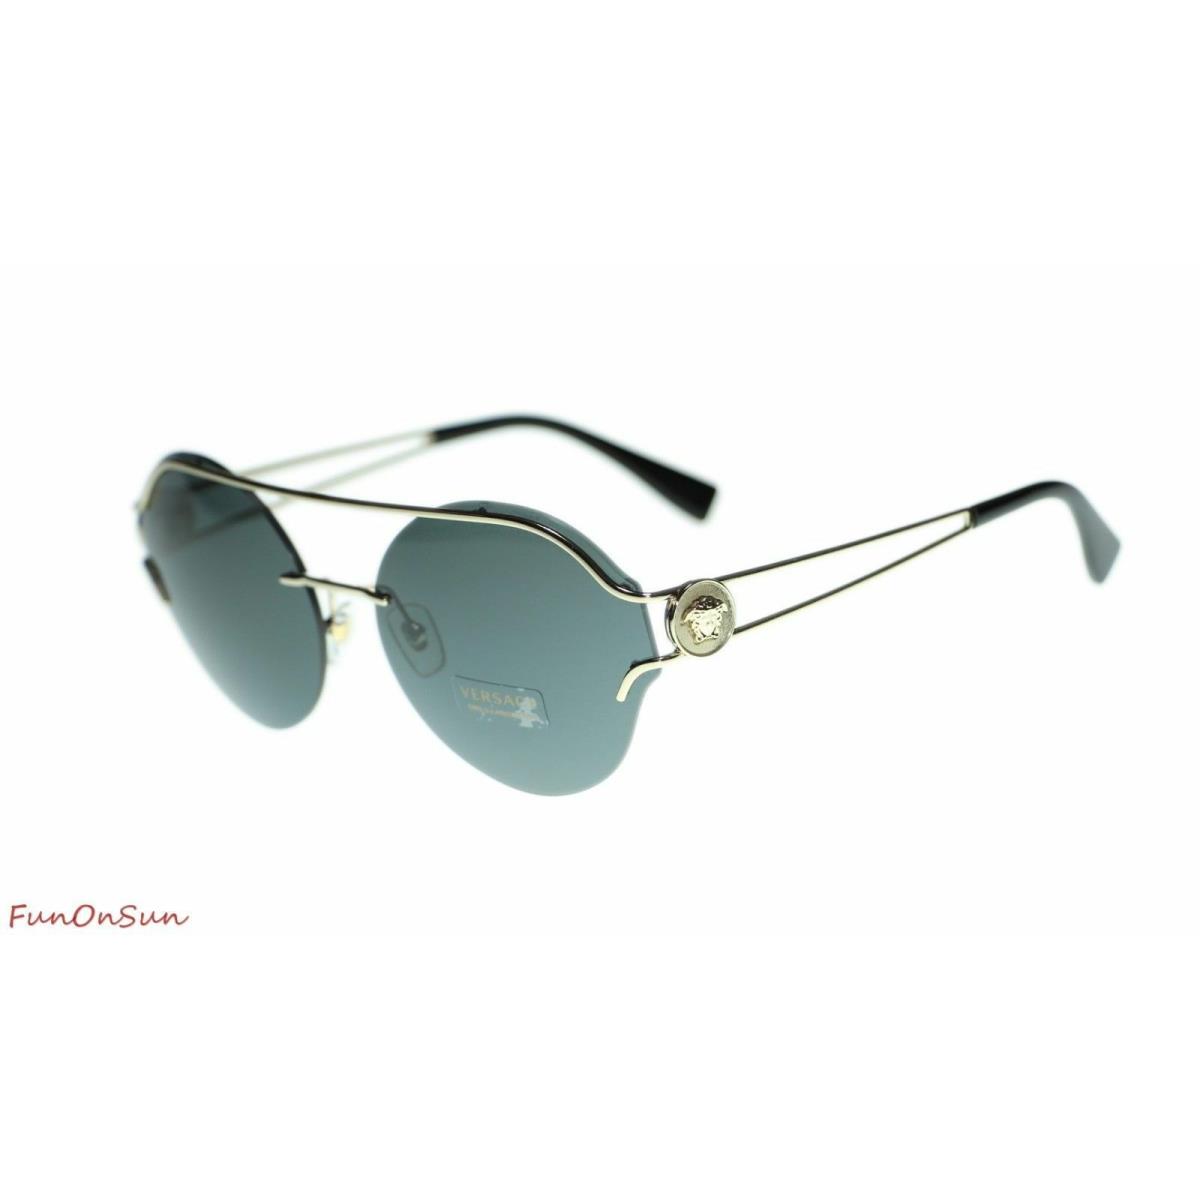 Versace sunglasses  - Black Frame, Purple Lens